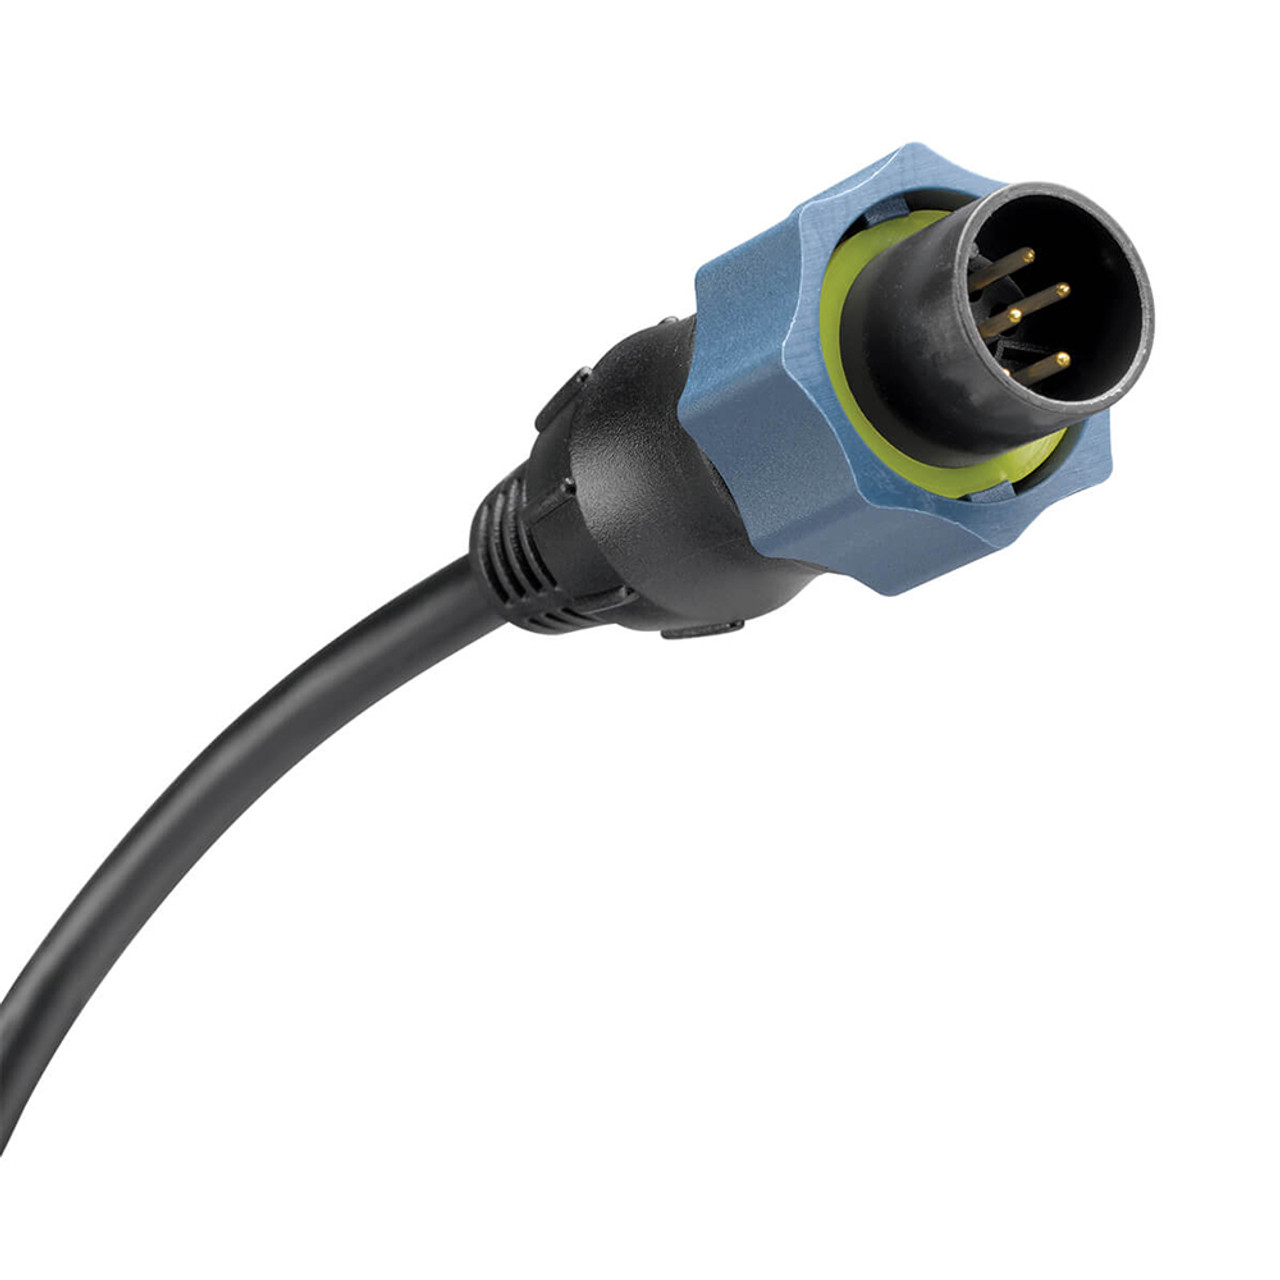 Minn Kota MKR-US2-10 Lowrance\/Eagle Blue Adapter Cable [1852060]